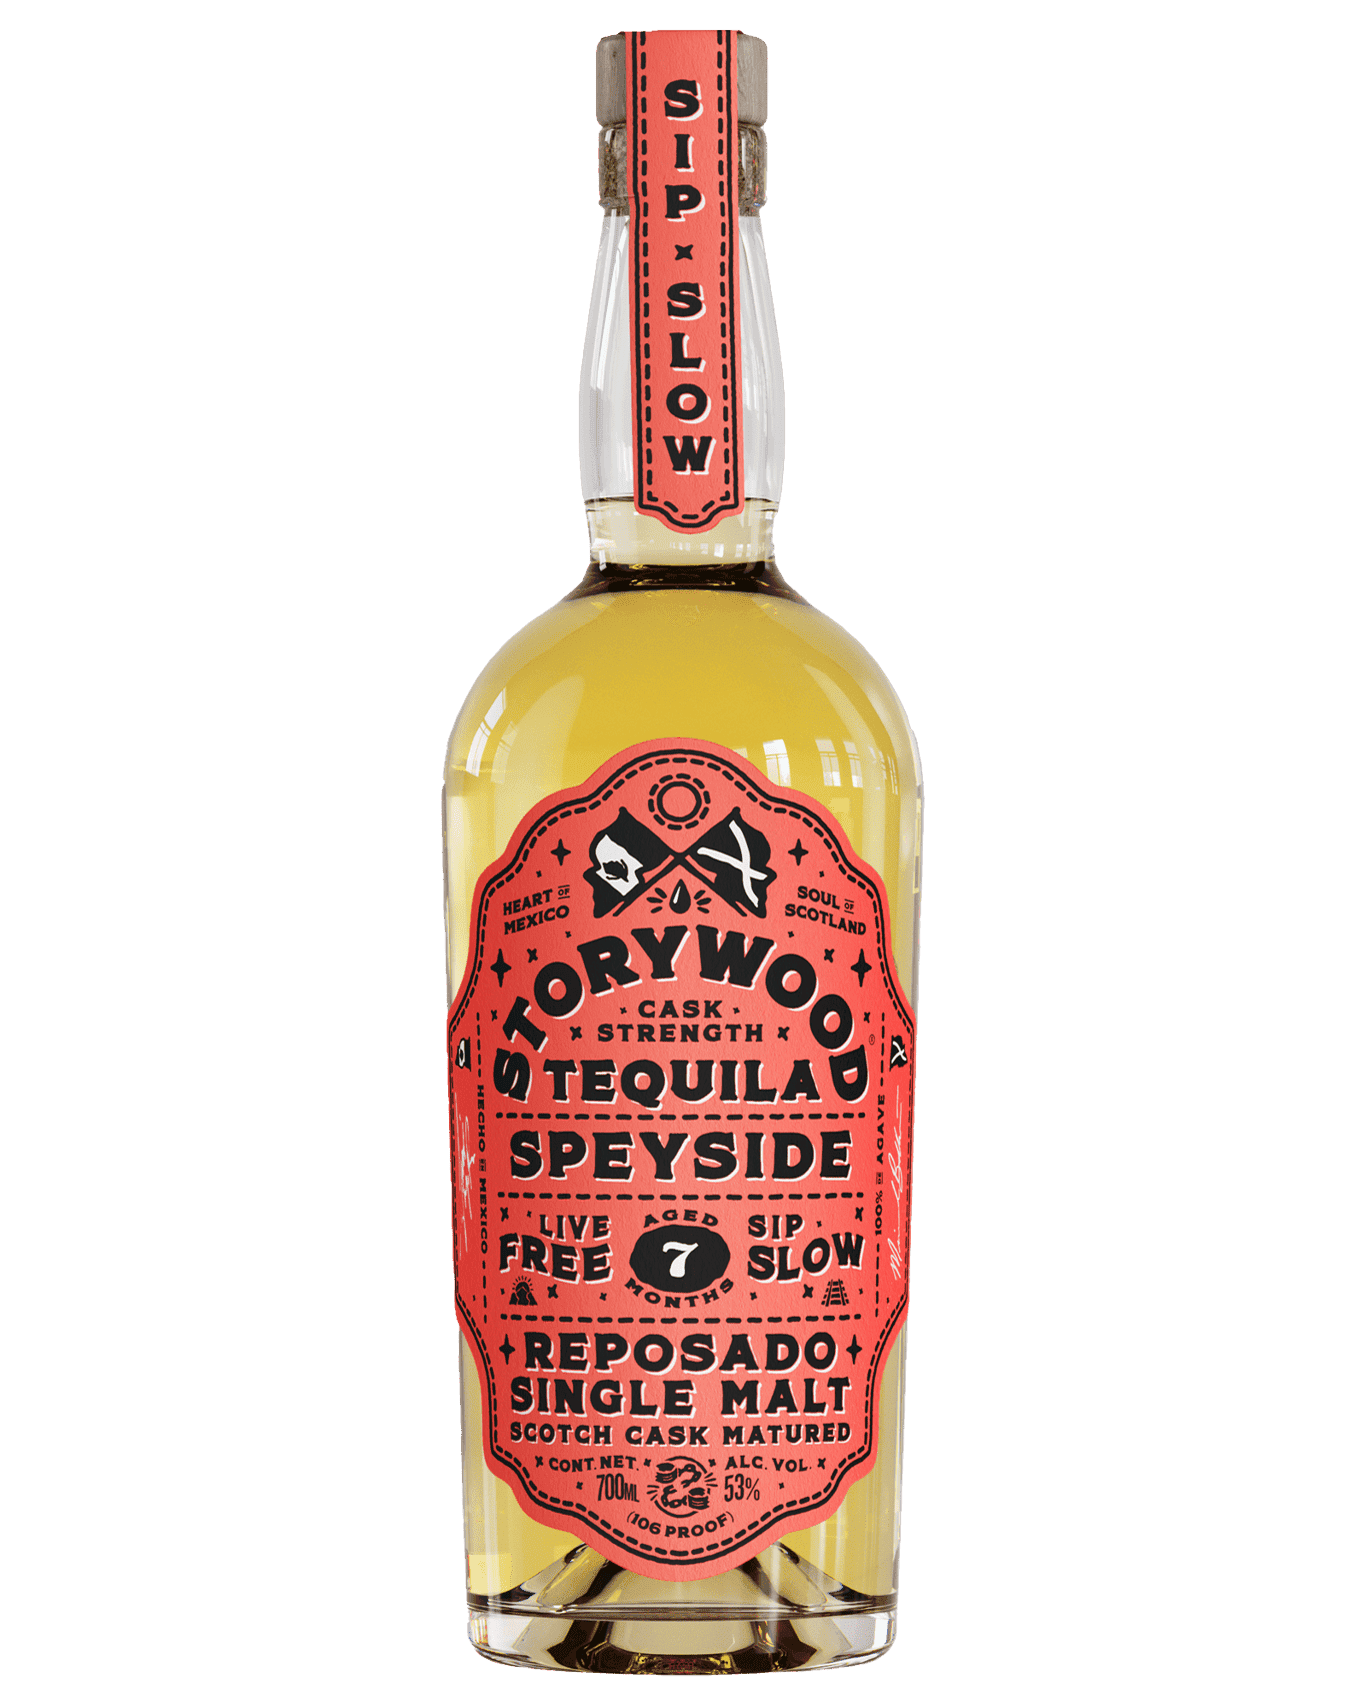 Storywood Speyside Reposado Tequila 7 months Cask Strength 700ml